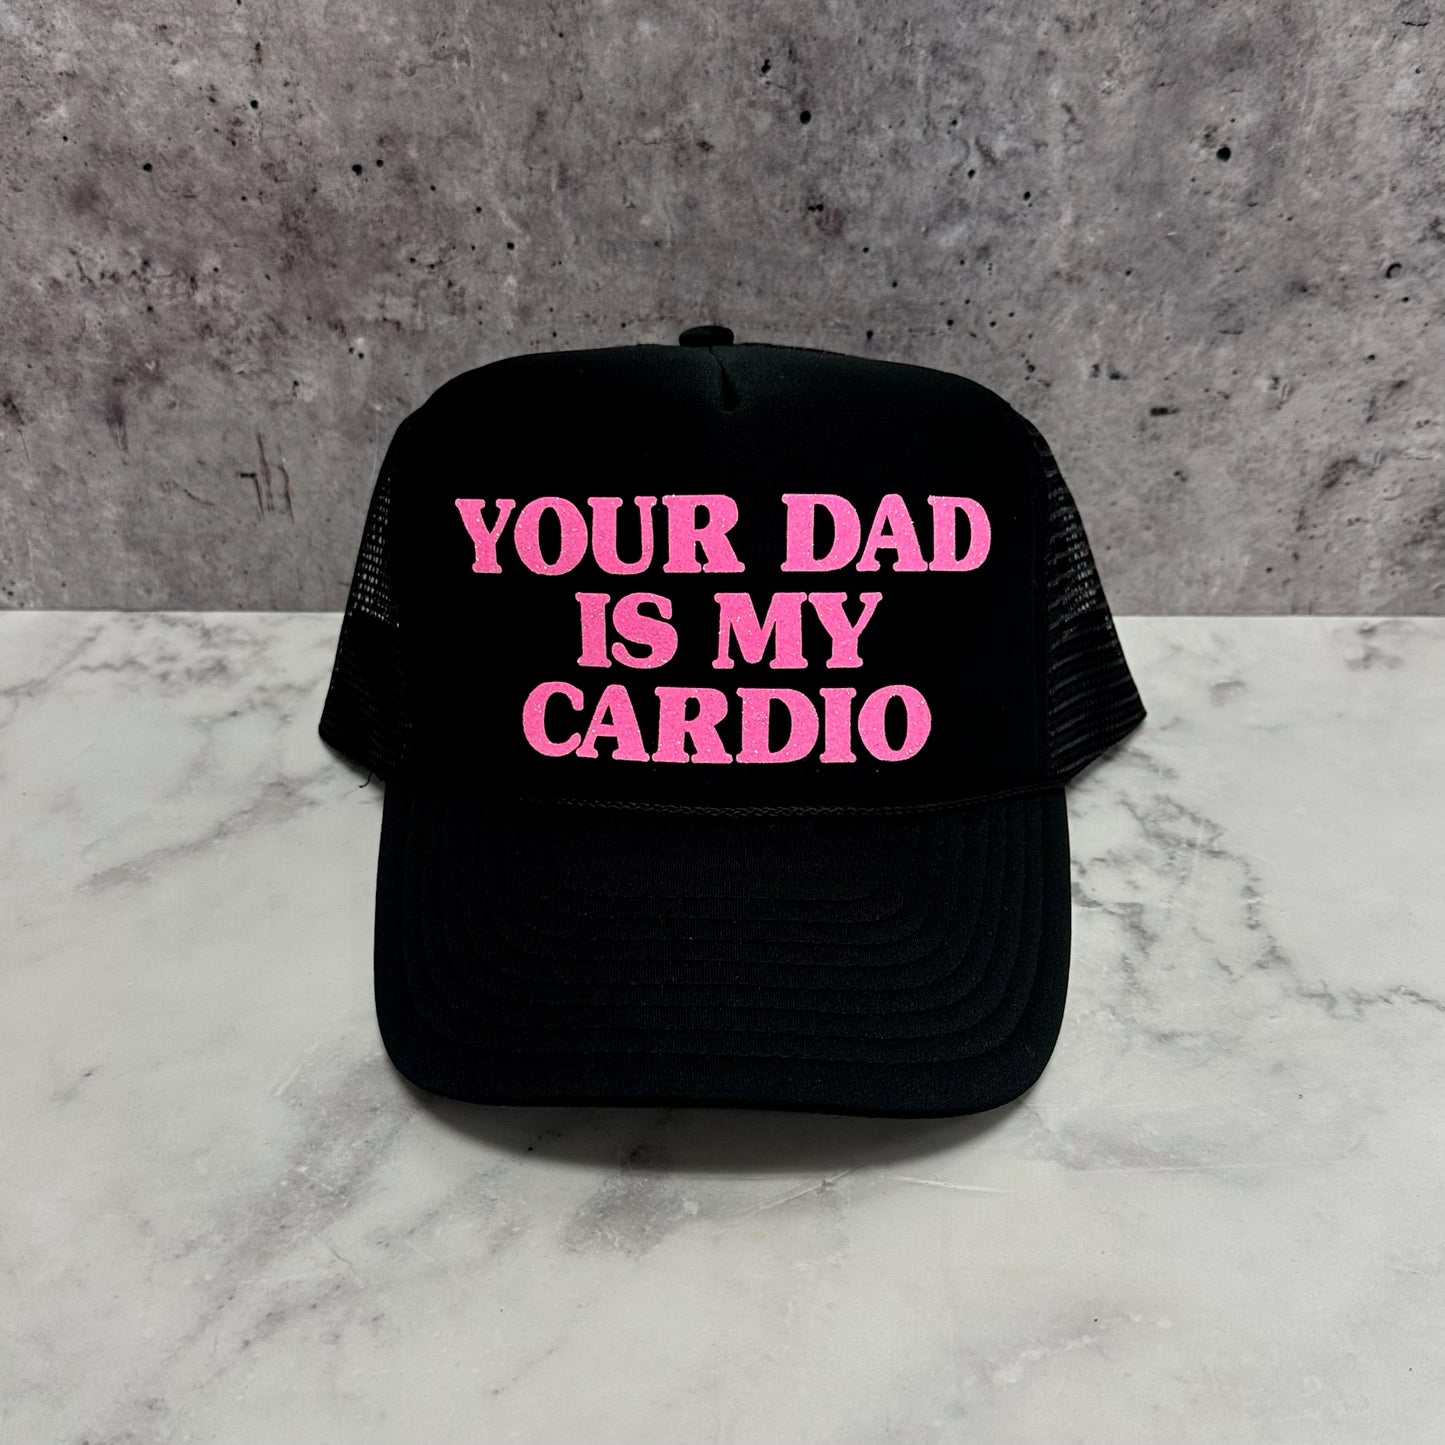 Your Dad is my Cardio Trucker Hat